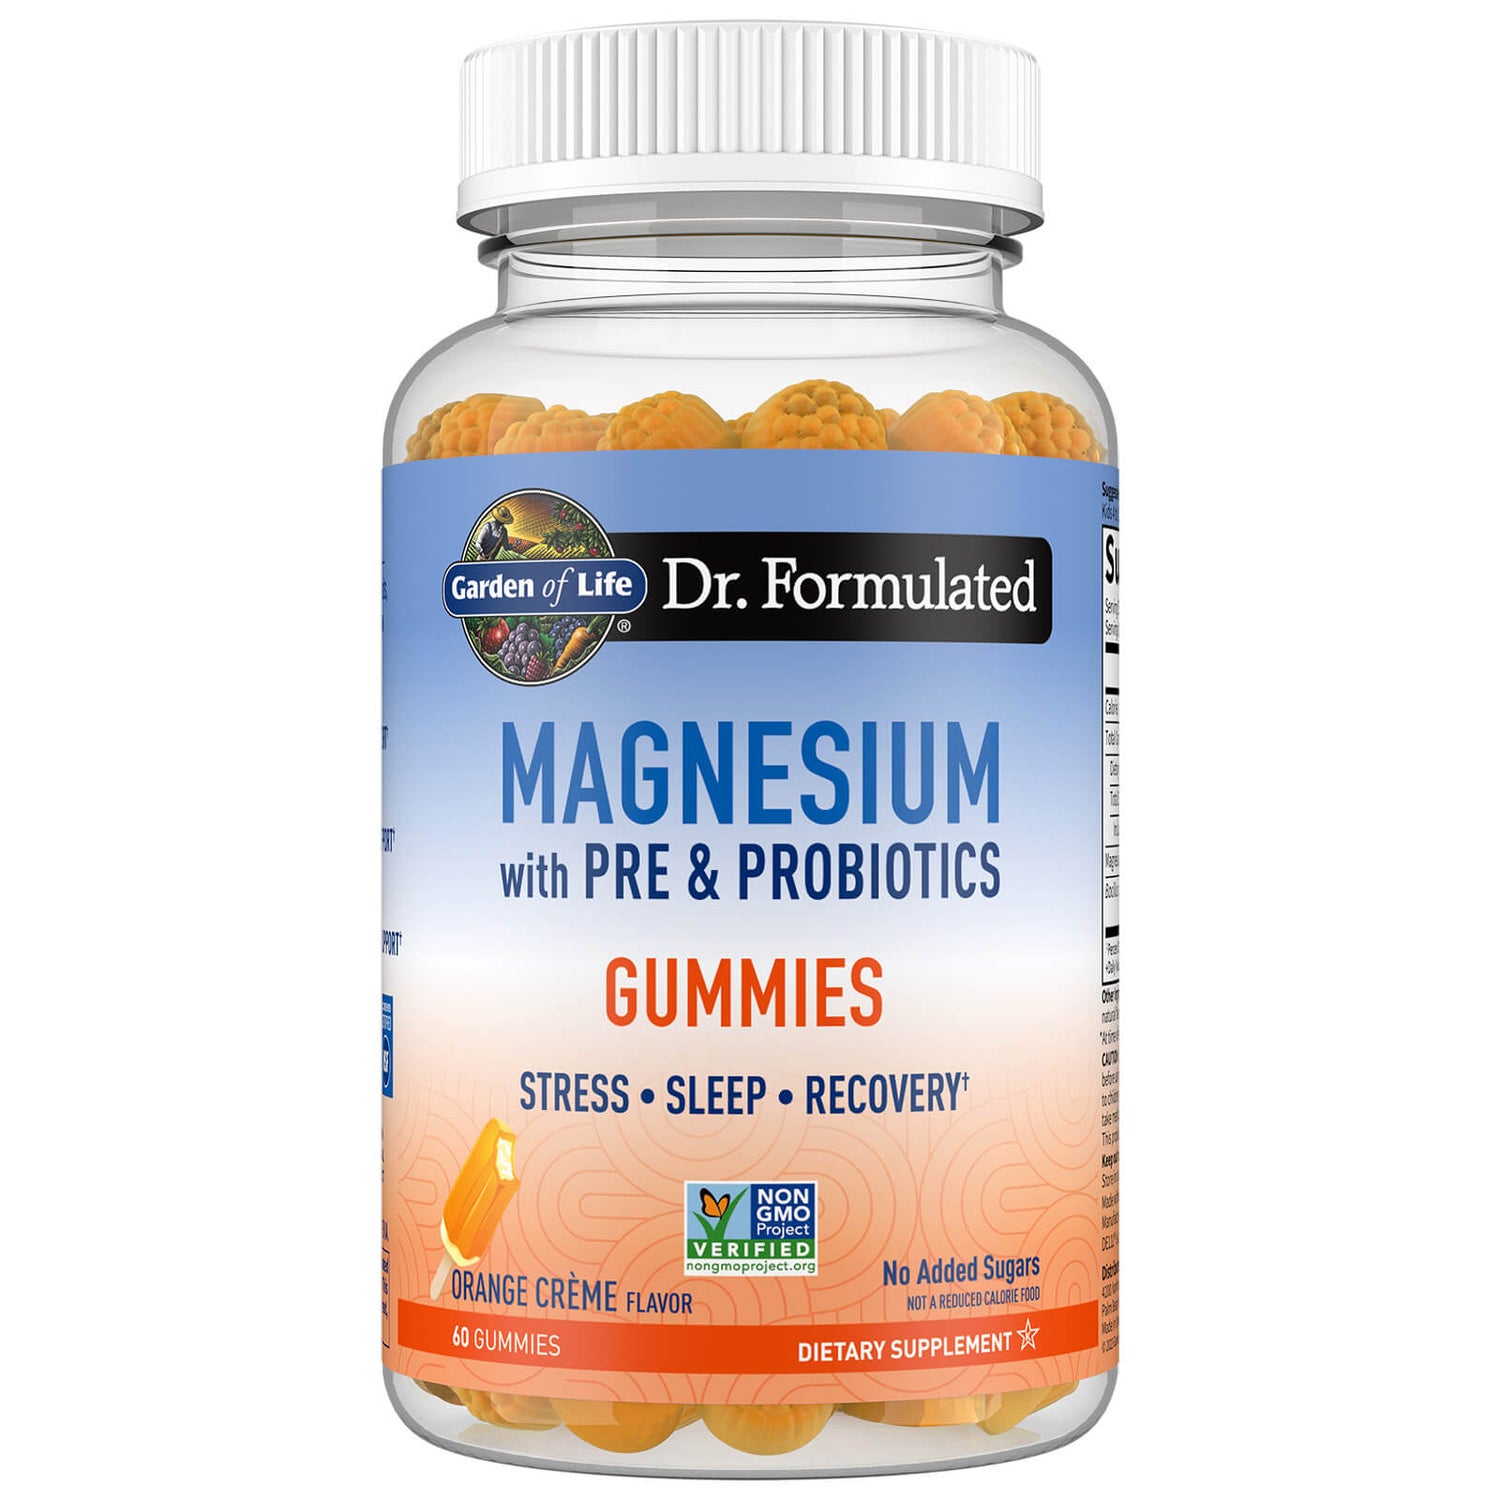 Dr. Formulated Magnesium Gummies - Sinaasappelcrème - 60 Gummies